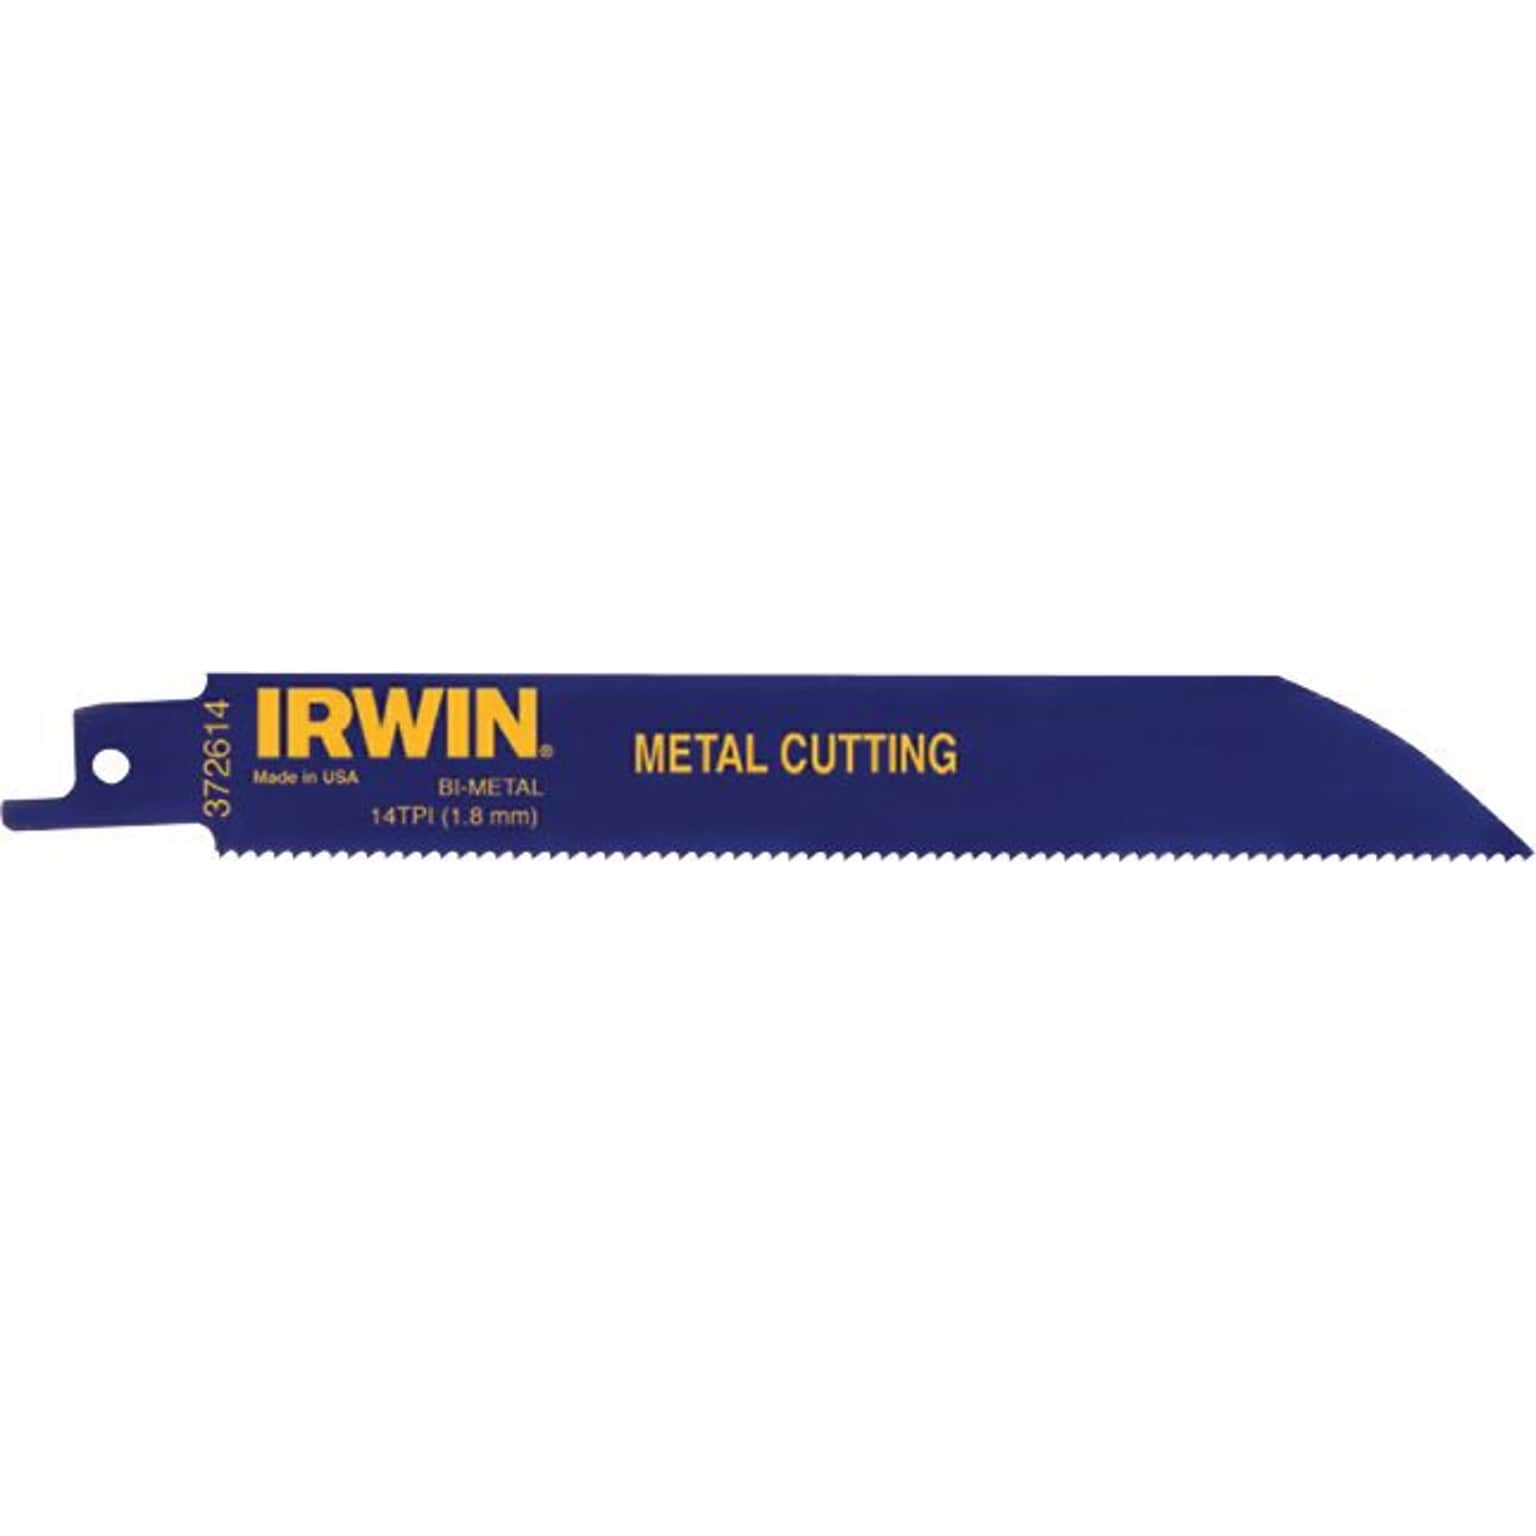 Irwin® Metal Cutting Reciprocating Saw Blades, 6, 14 TPI, 25/Pack